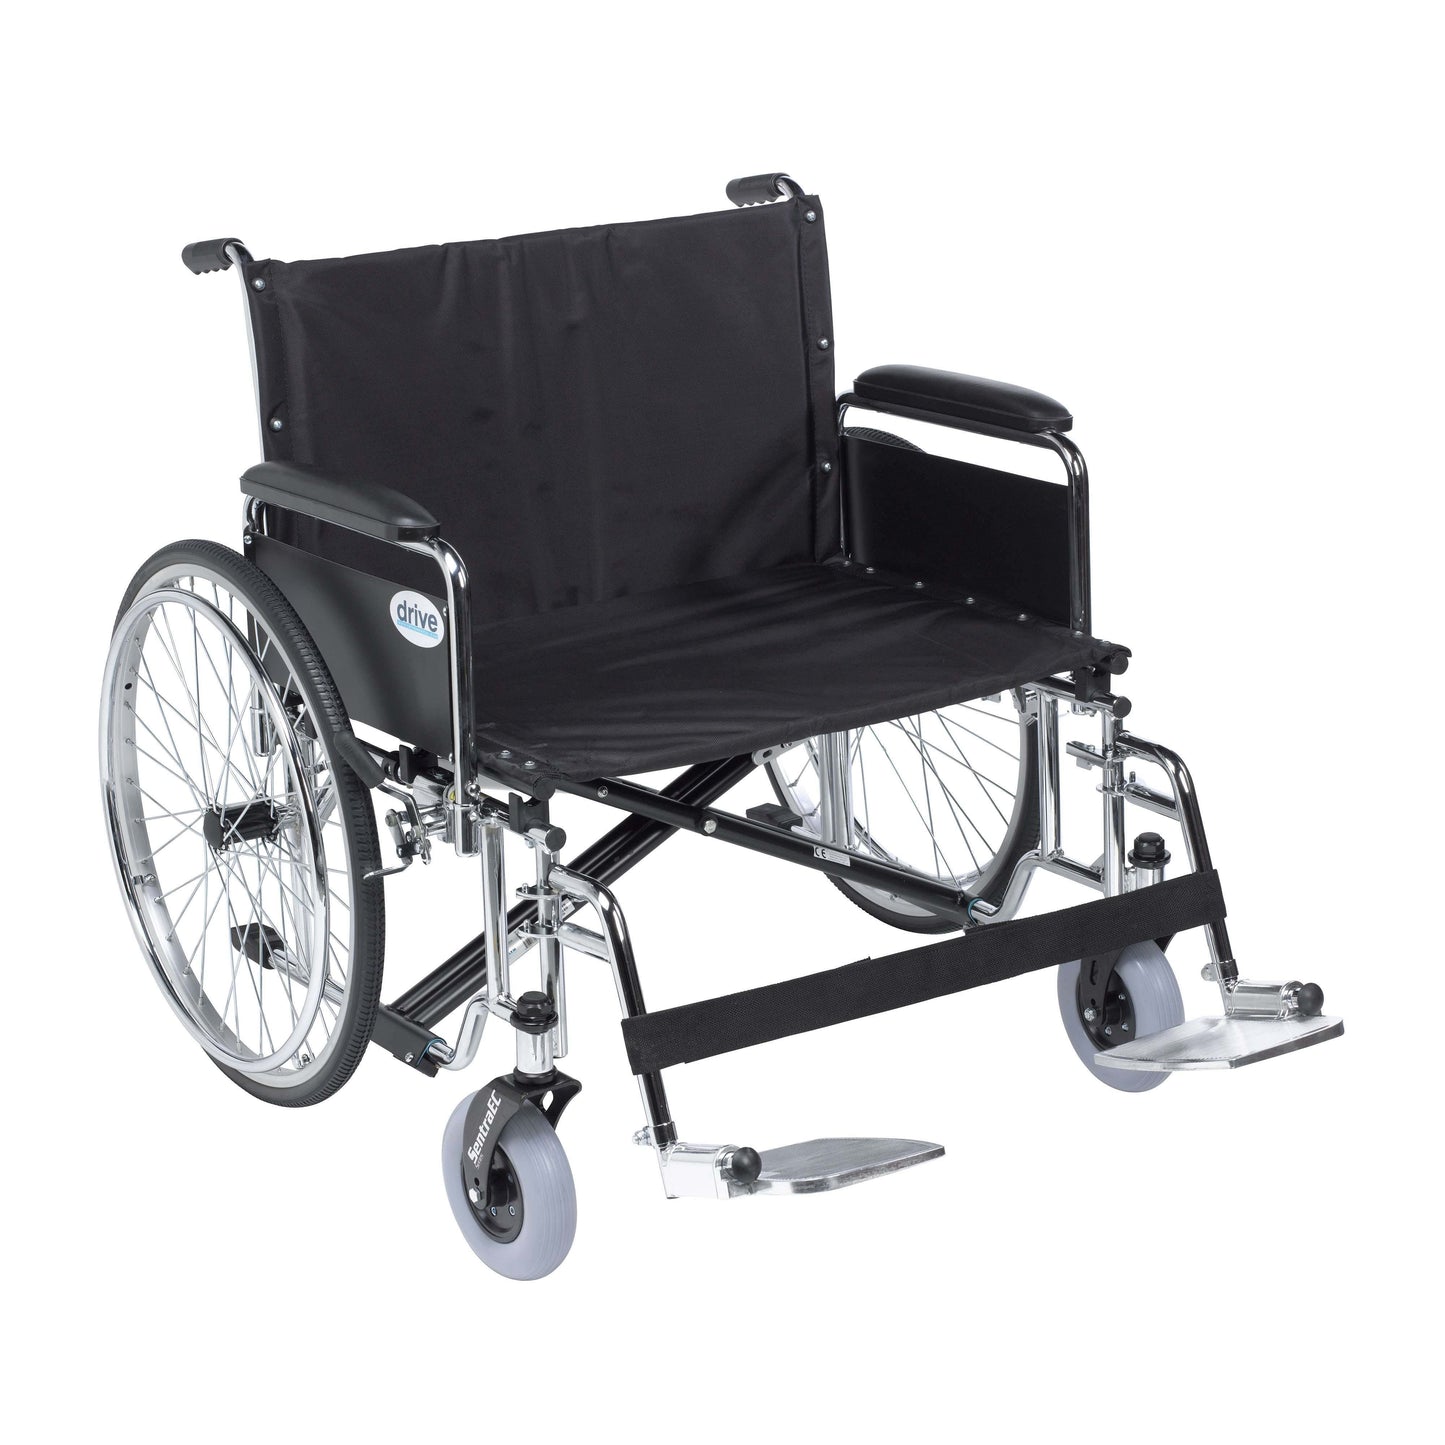 Drive std28ecdfa-sf Sentra EC Heavy Duty Extra Wide Wheelchair, Detachable Full Arms, Swing away Footrests, 28" Seat